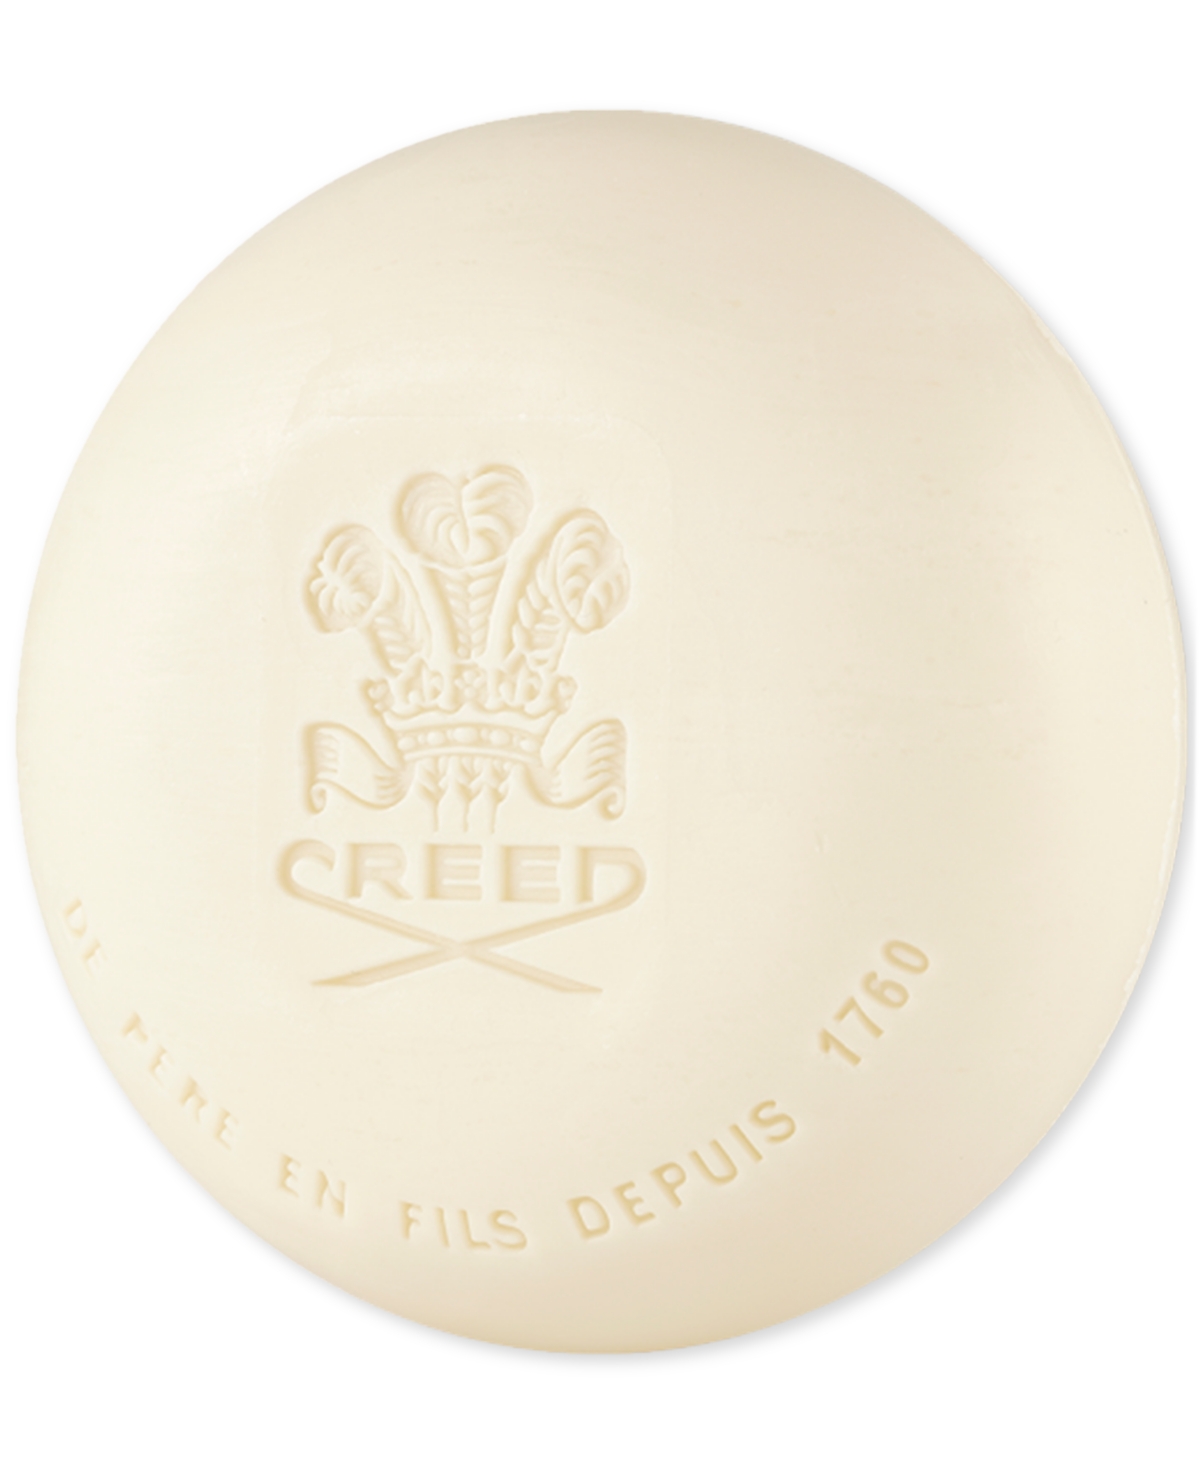 Creed Aventus Soap, 5.2 Oz.